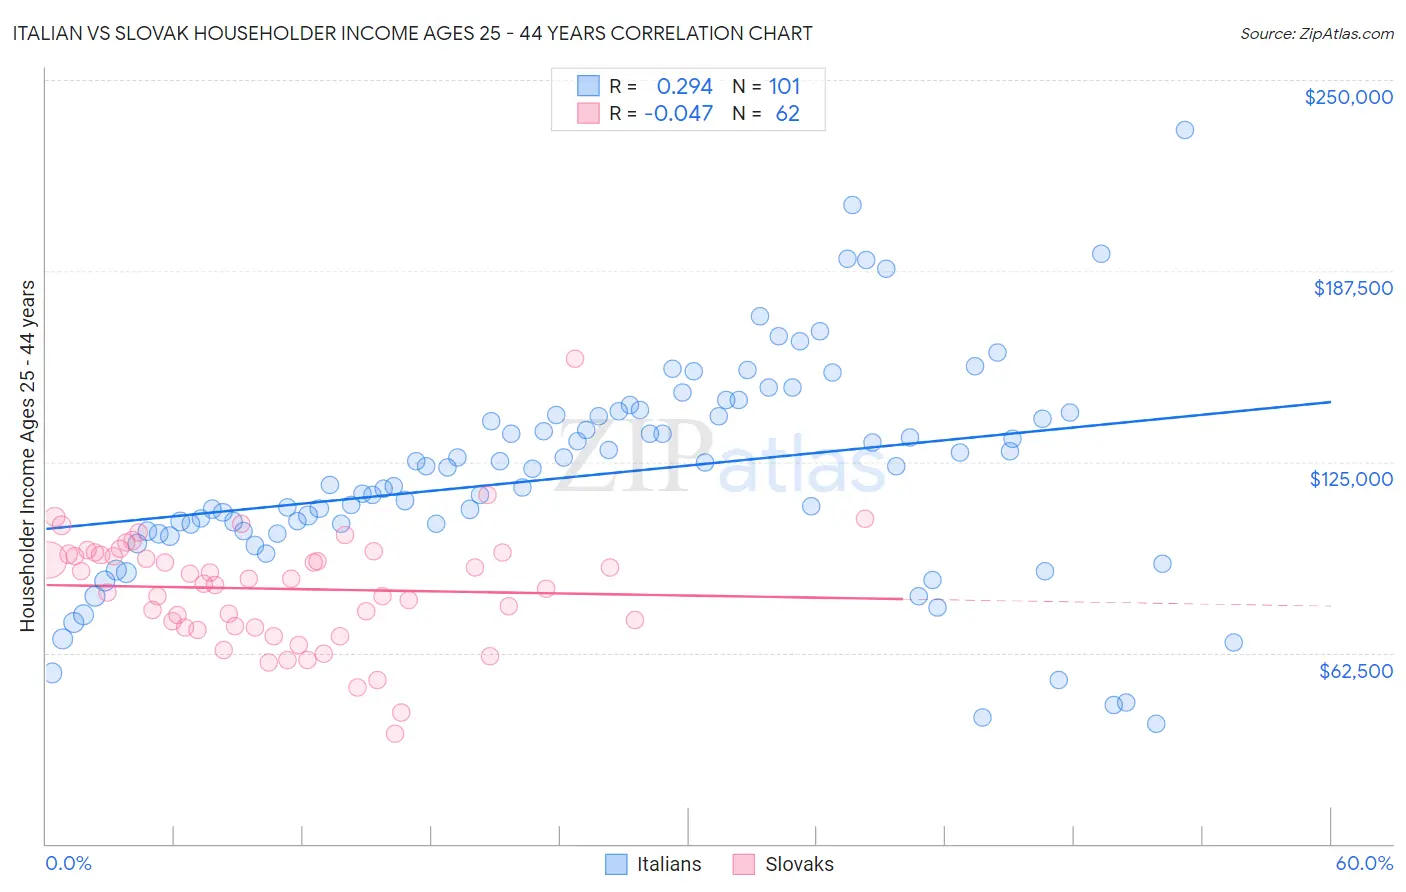 Italian vs Slovak Householder Income Ages 25 - 44 years